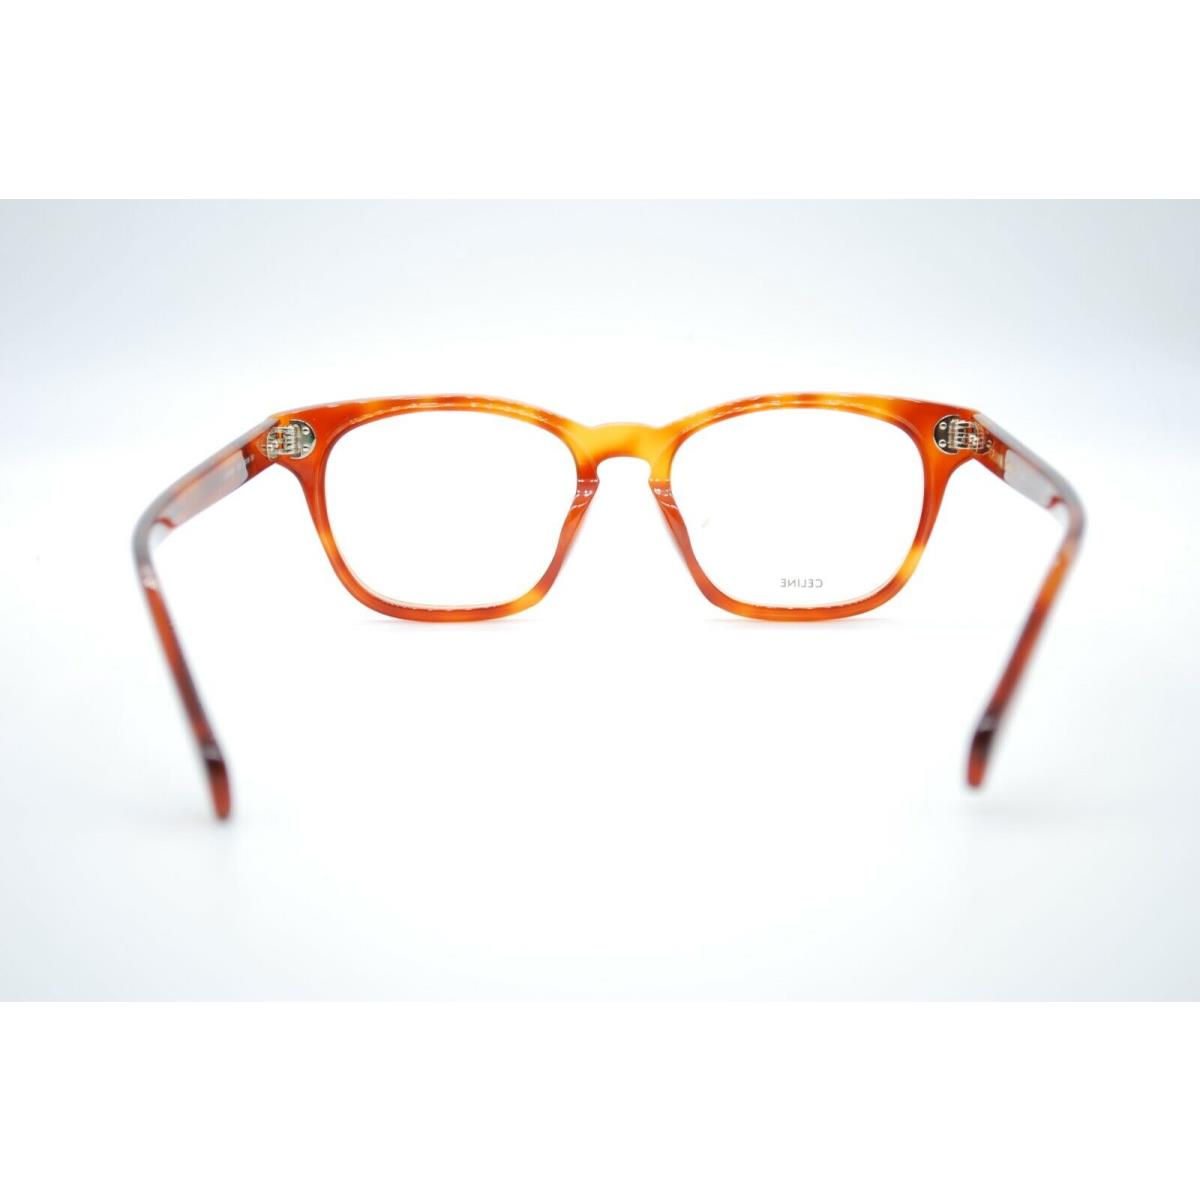 Celine eyeglasses  - Brown Frame 3